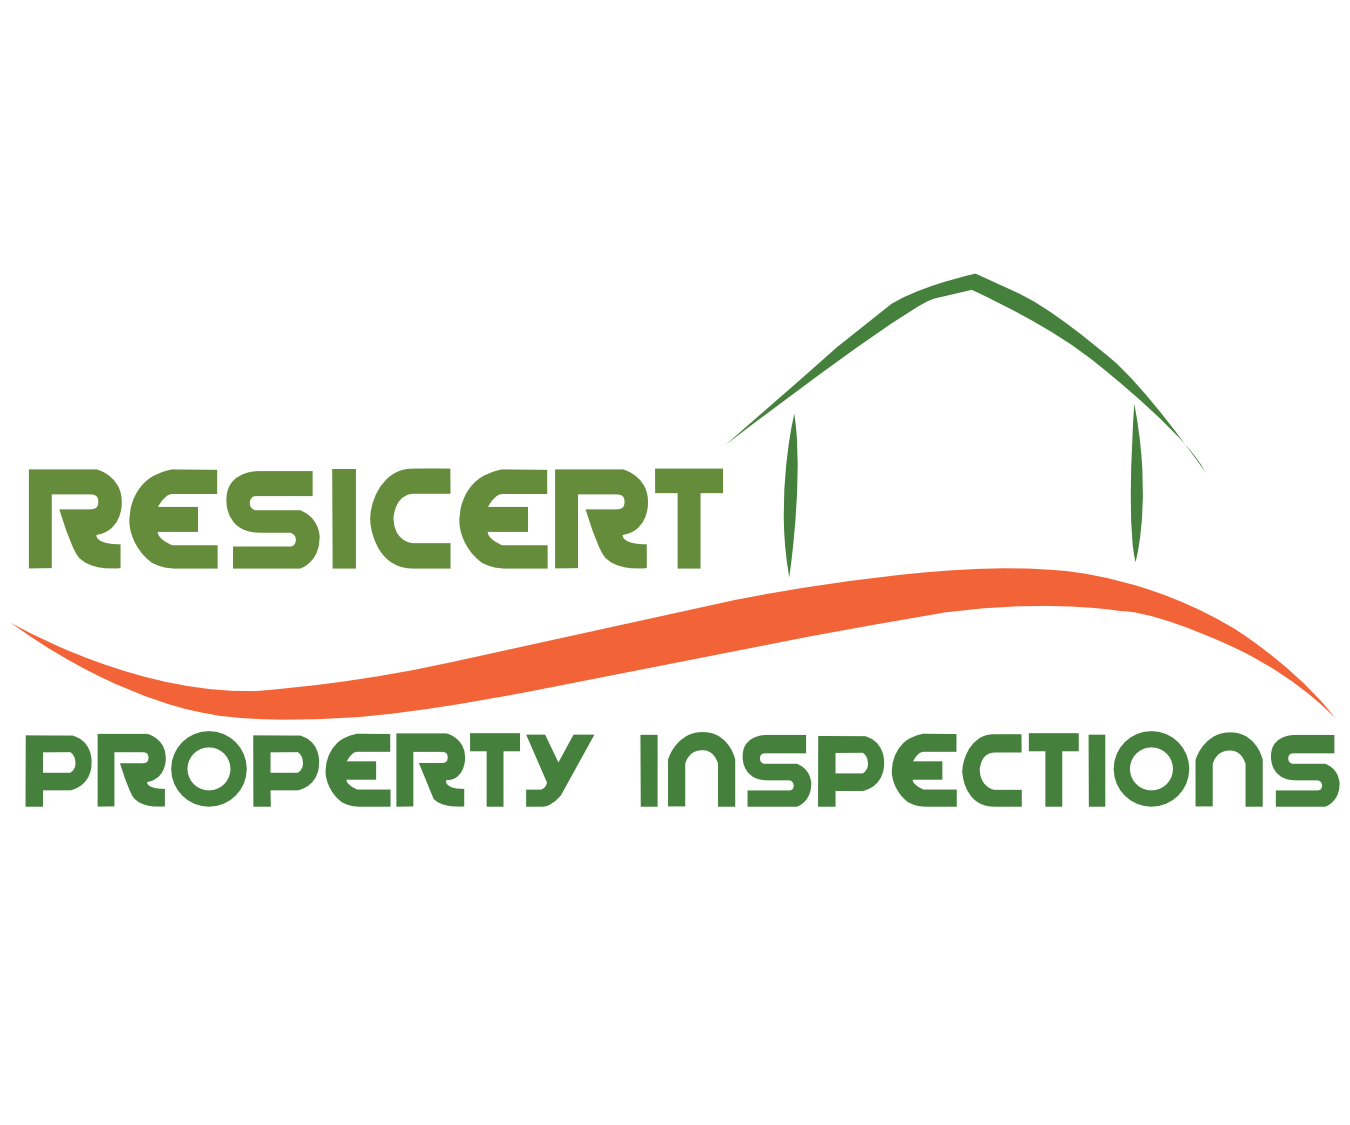 Resicert Property Inspections